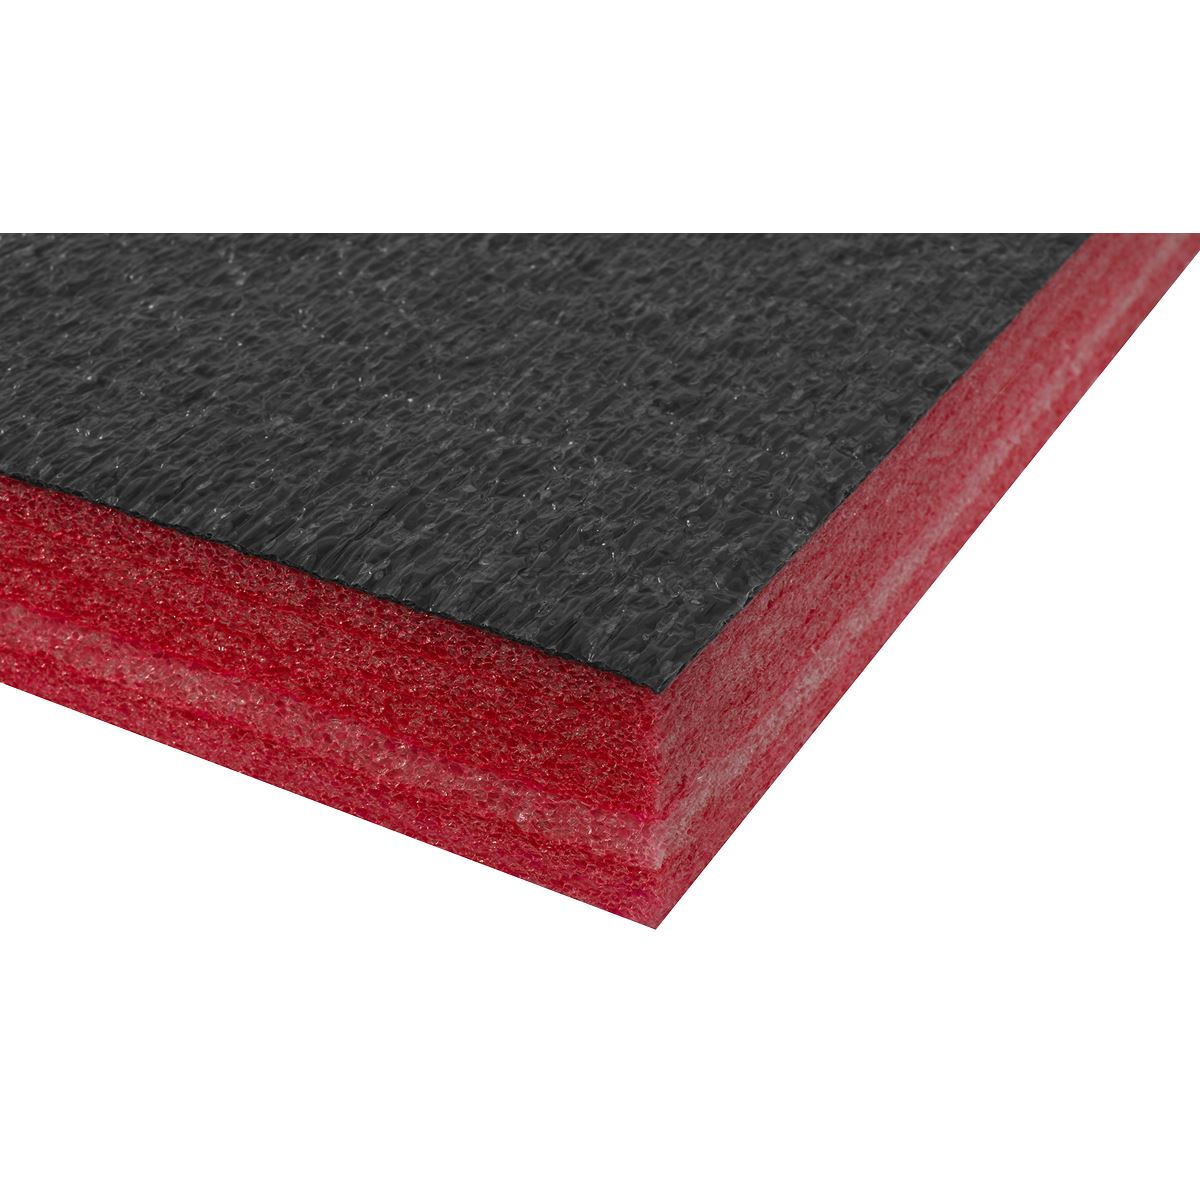 Sealey Easy Peel Shadow Foam Red Black 1200 x 550 x 50mm Tool Tray Insert